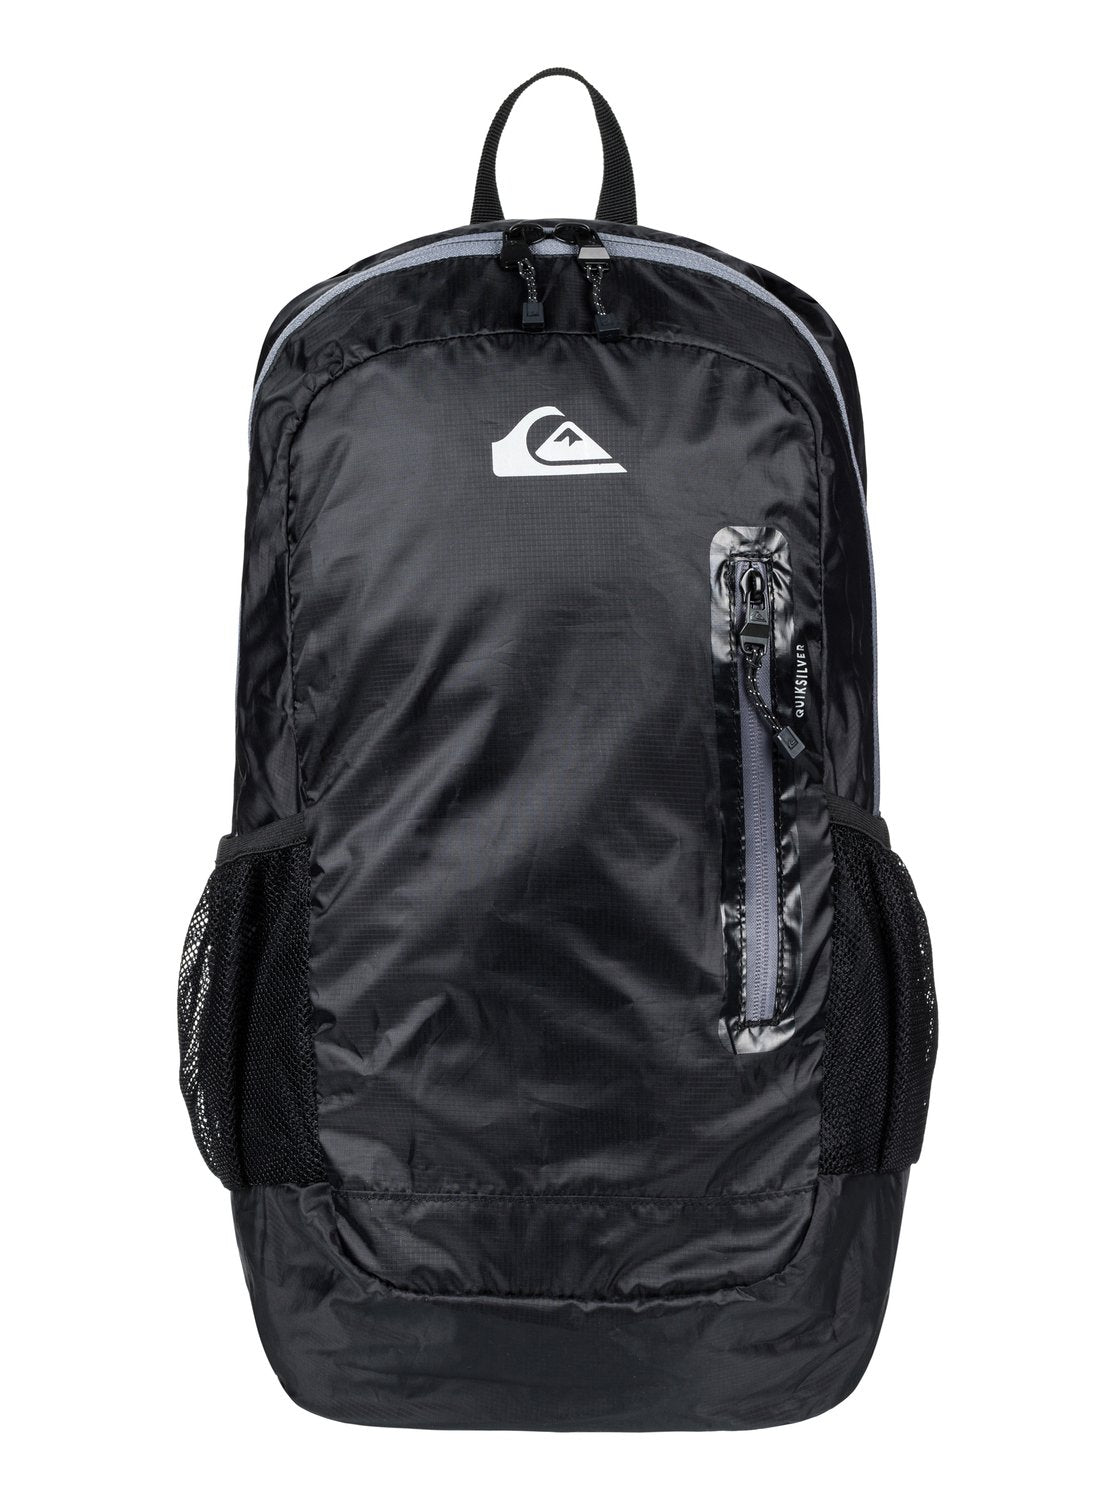 Quiksilver Octopackable 22L Backpack